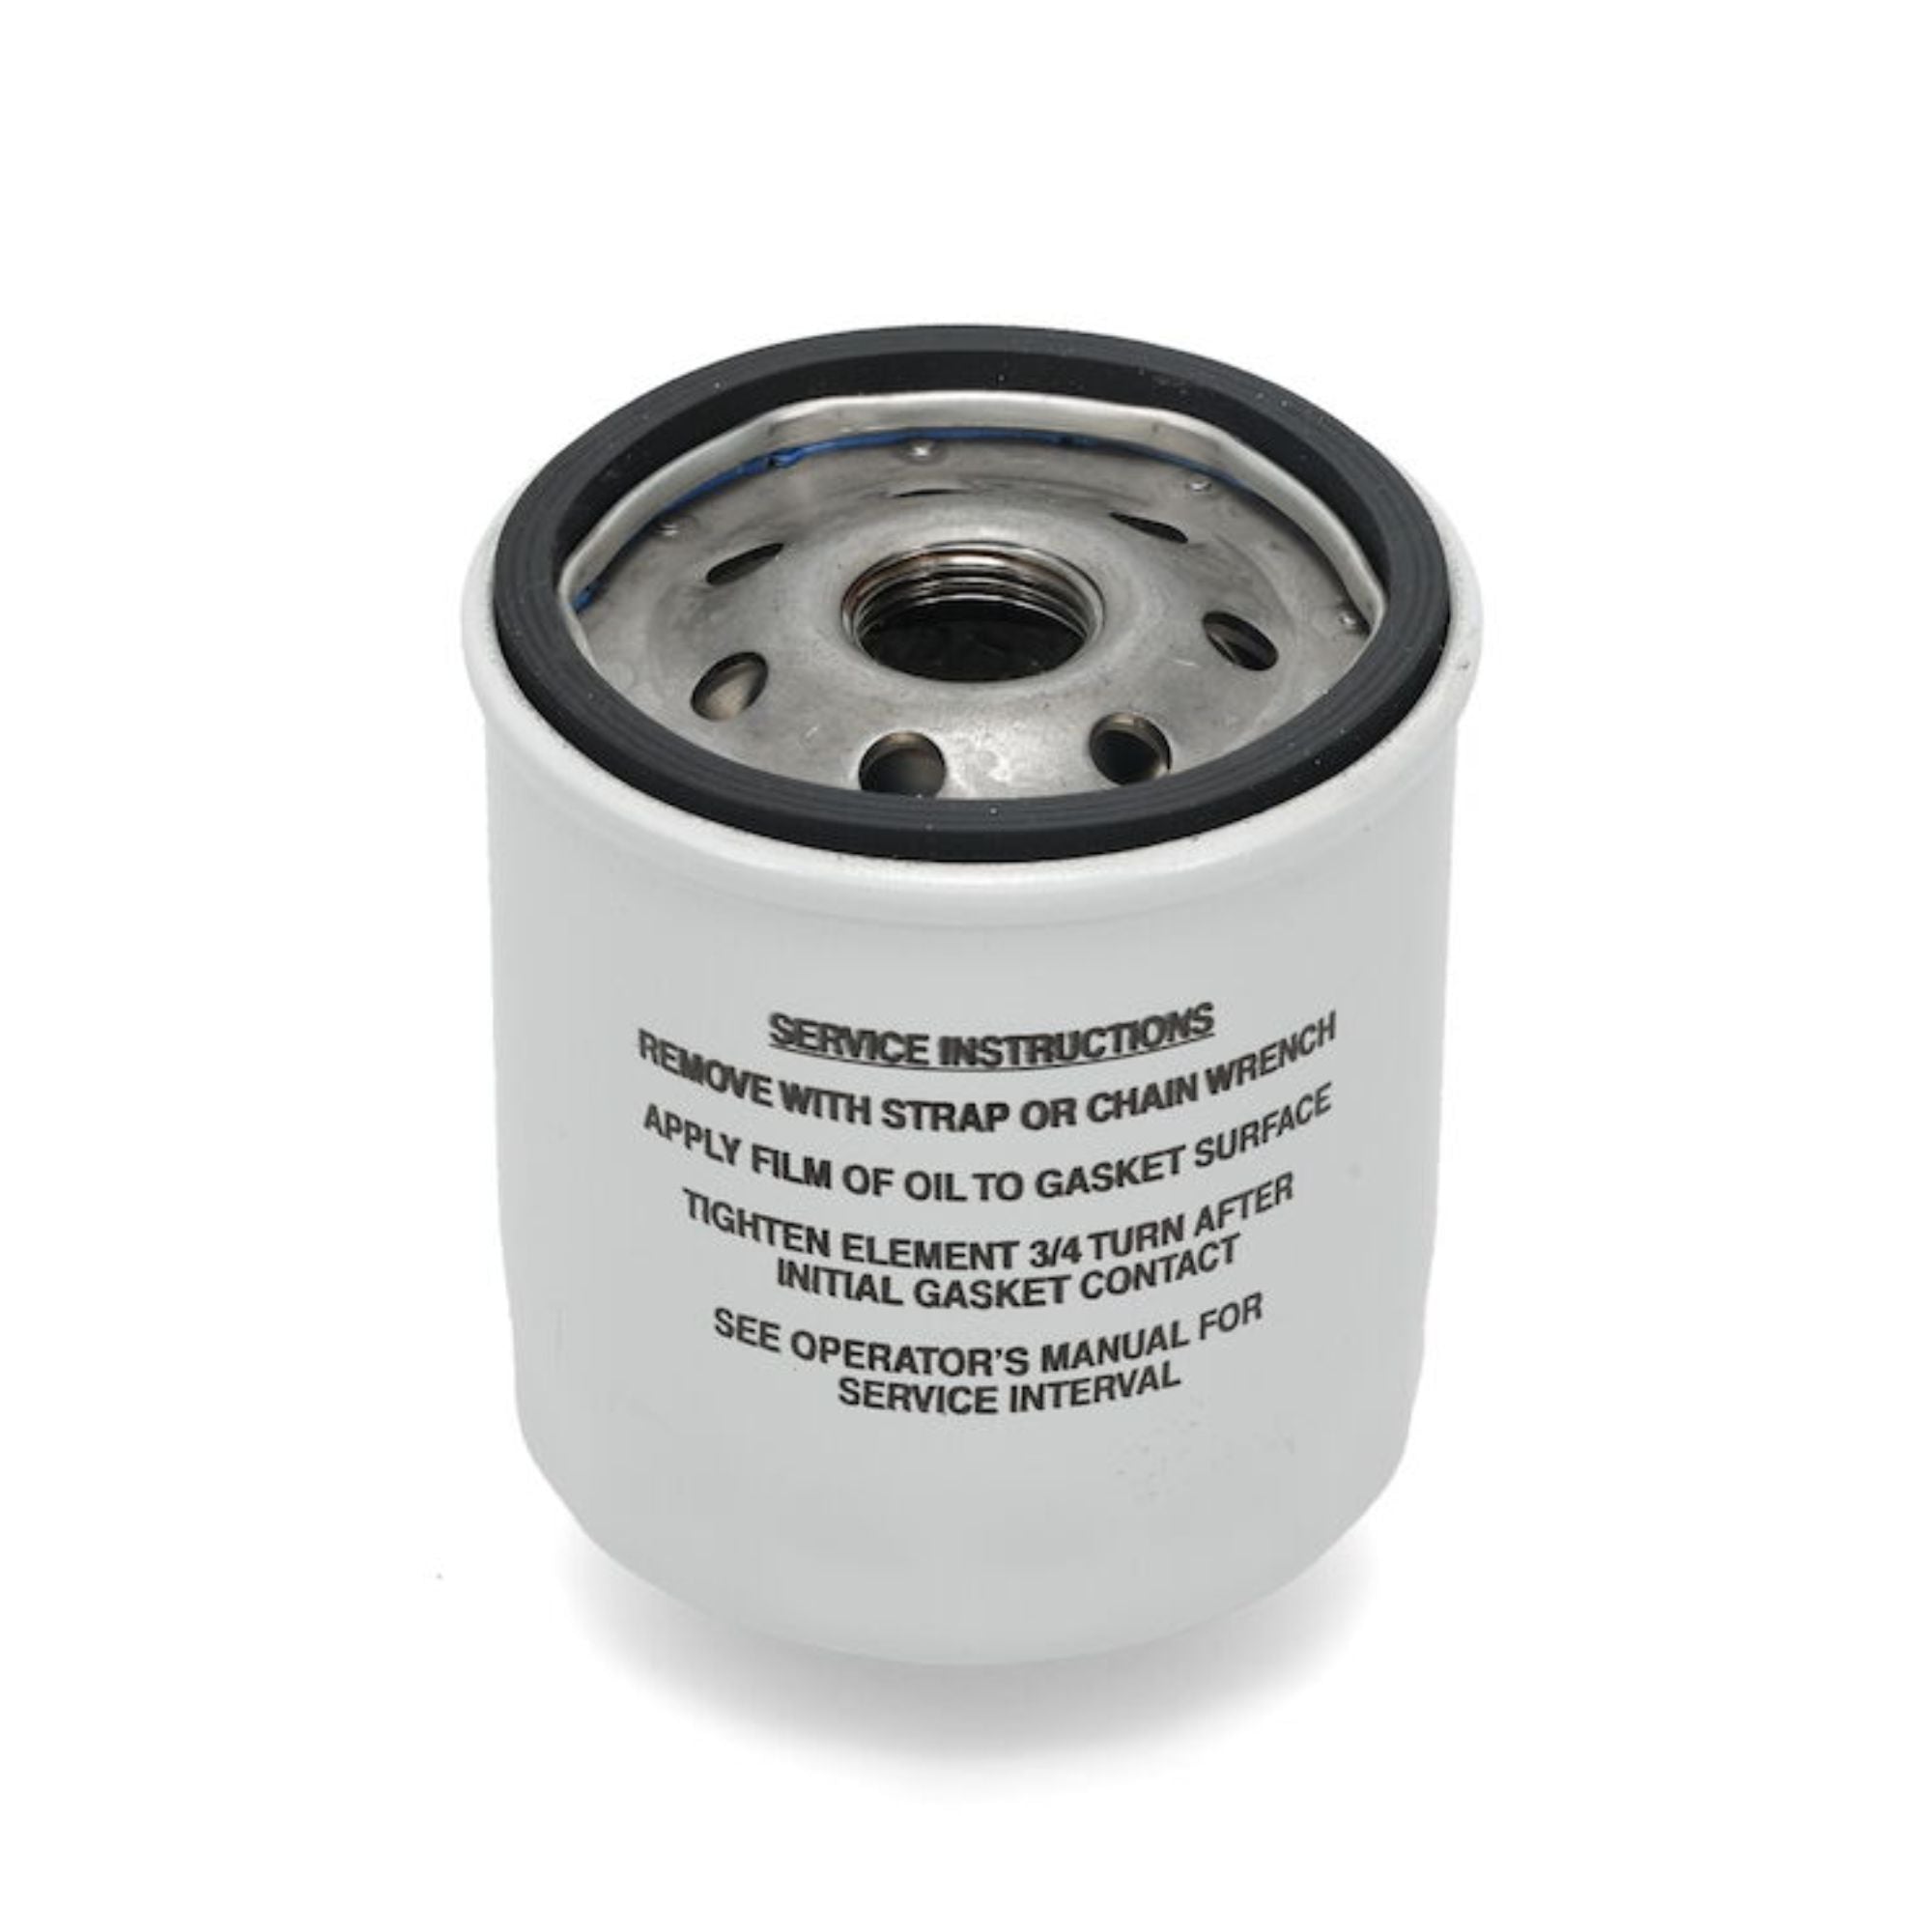 Toro Hydraulic Oil Filter | 114-3494